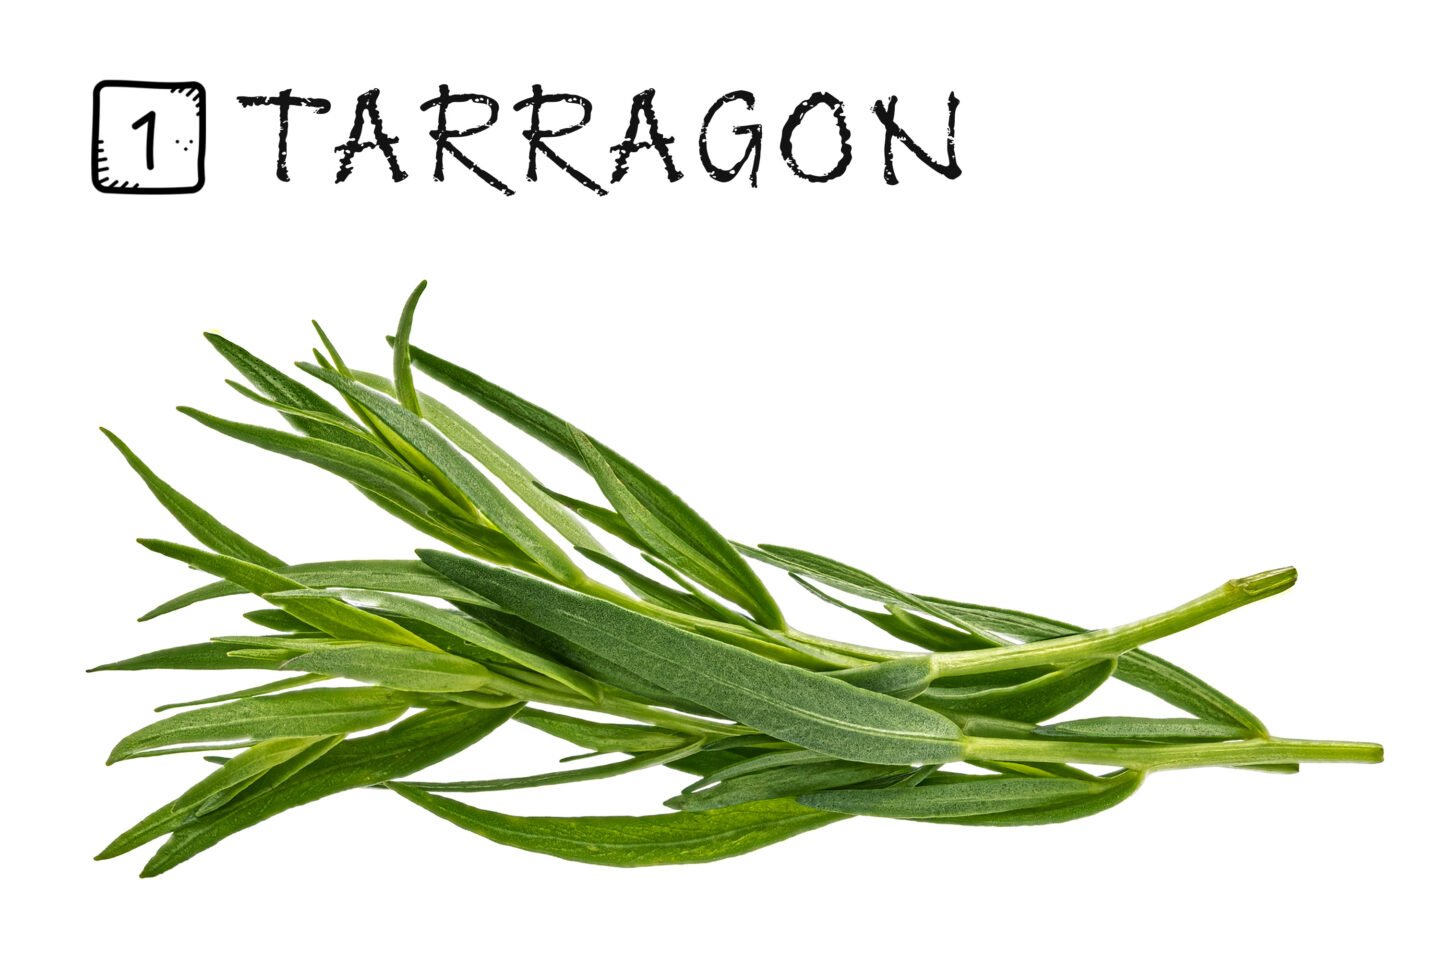 1 tarragon leaves